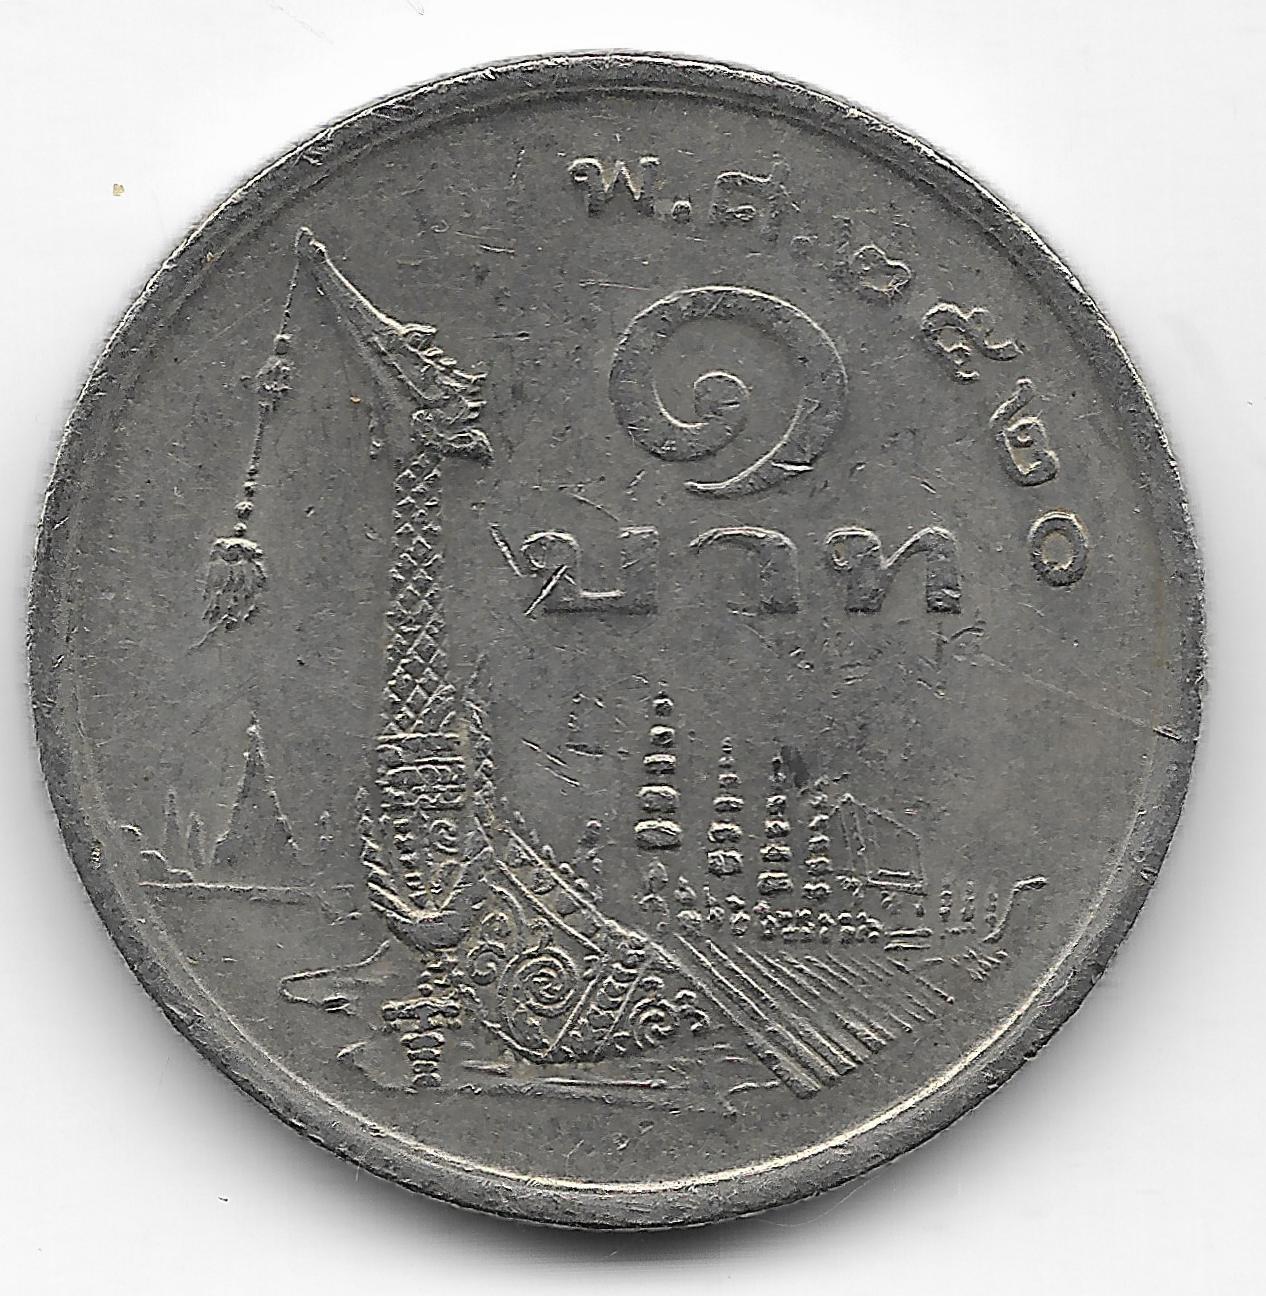 Монета 1 бат. Монета гроши Обратная сторона. 1 Spielgeld монета. Монета 5 копеек Пролетарии всех стран соединяйтесь. 7 1/2 Копеек марка.